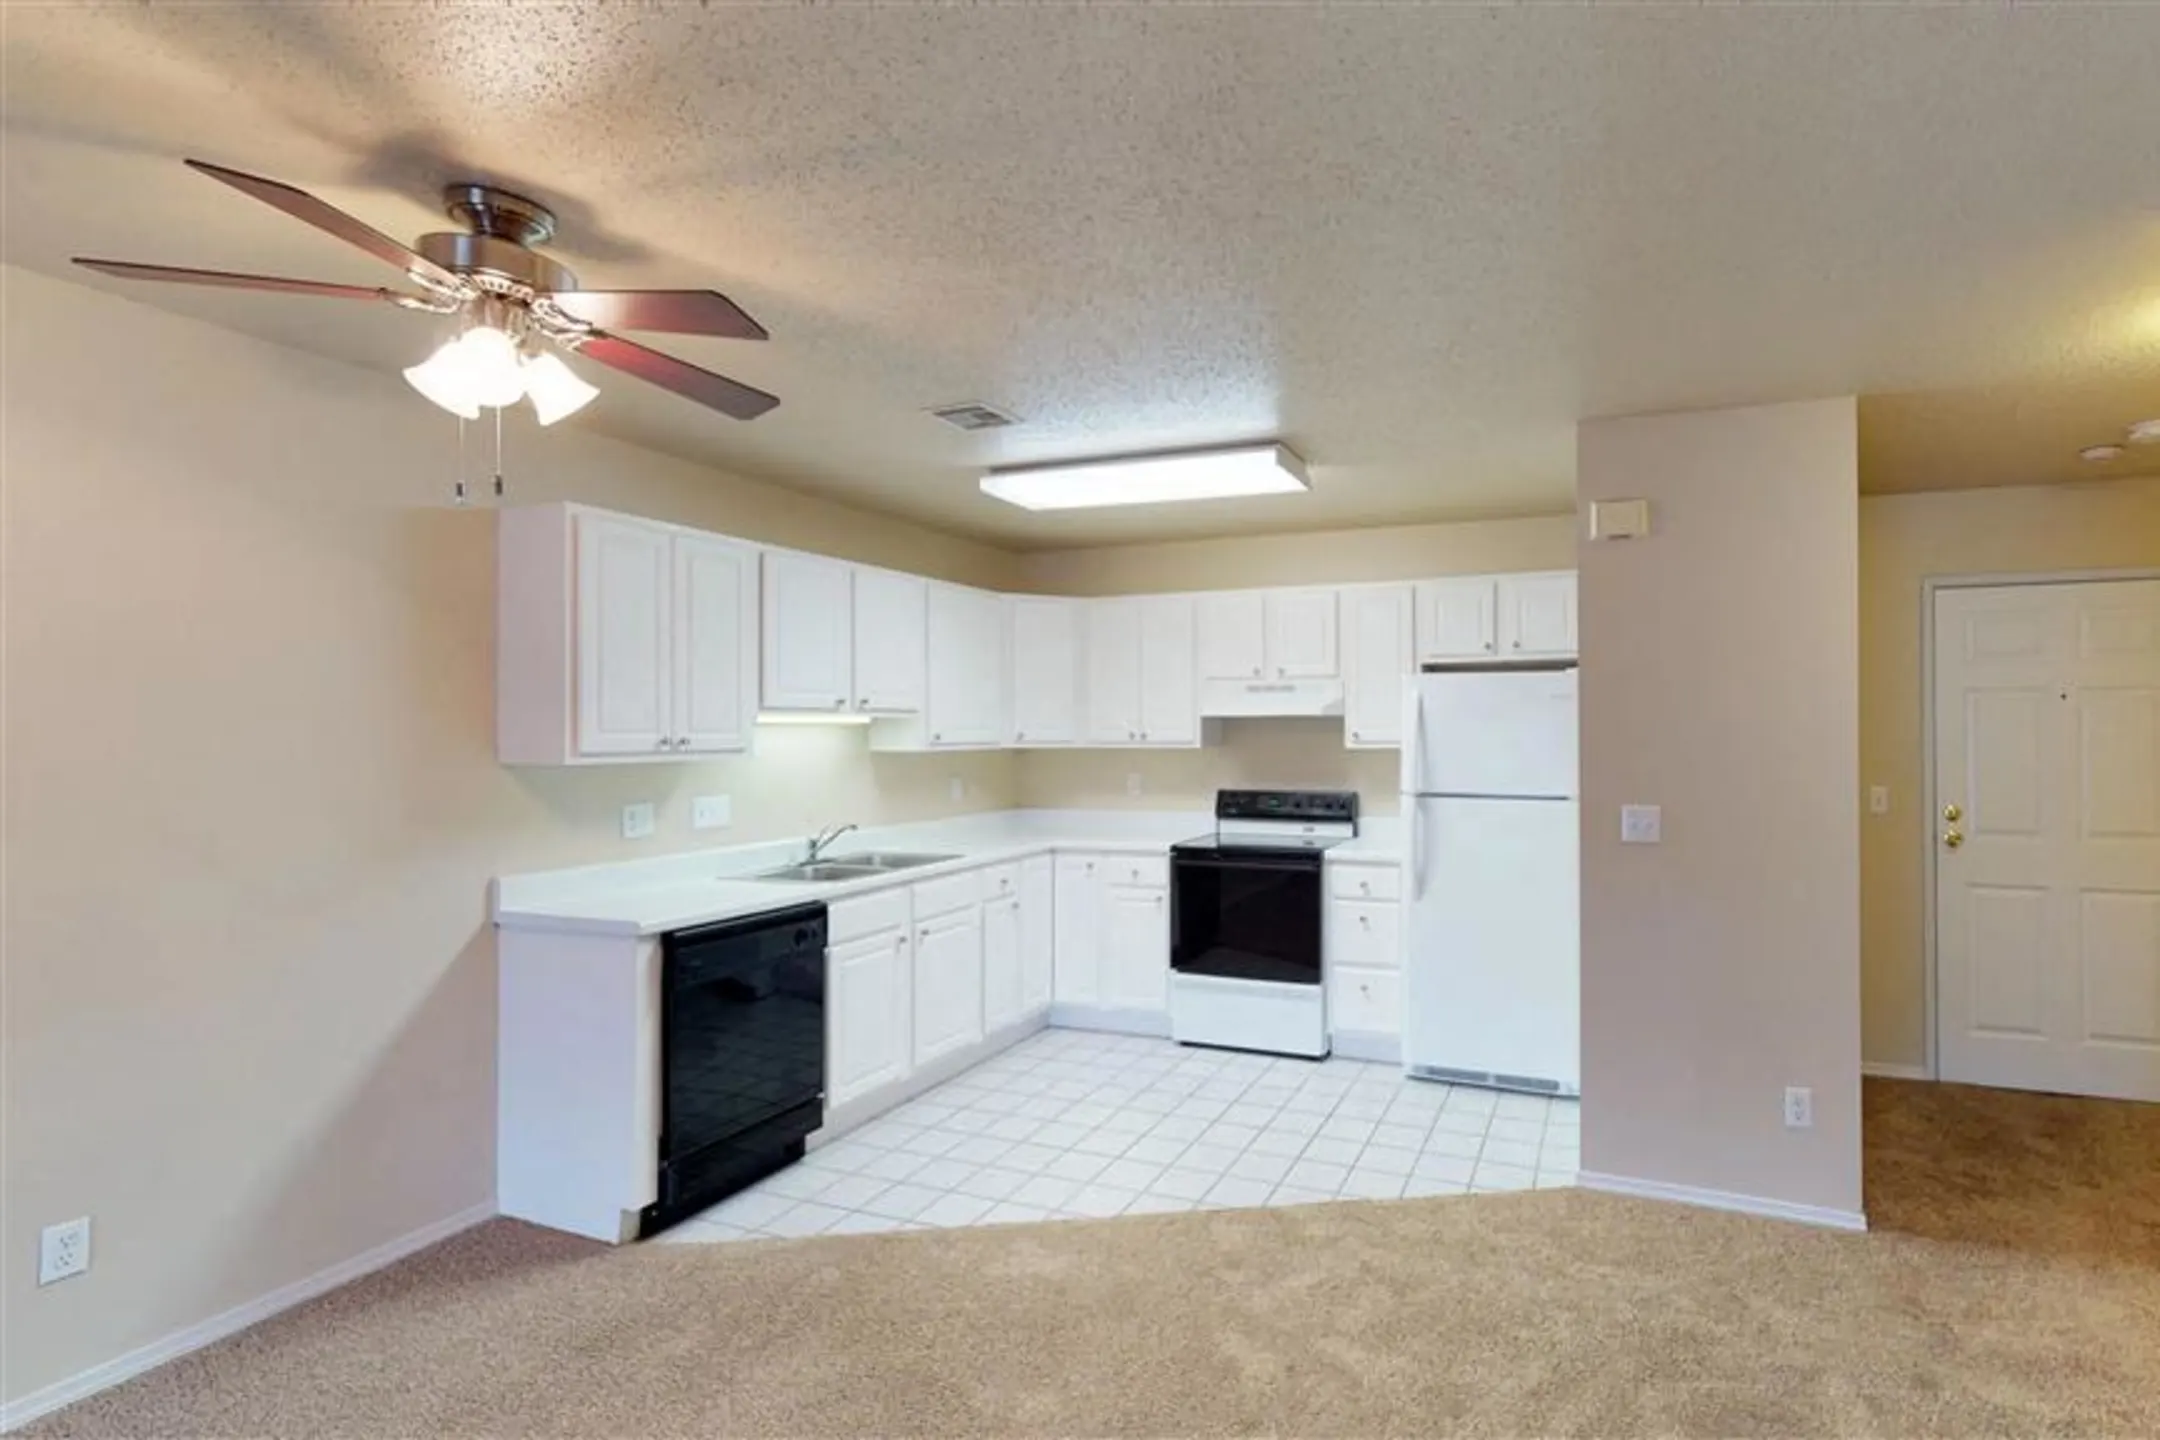 Kitchen - Sierra Vista Apartments - Sioux Falls, SD